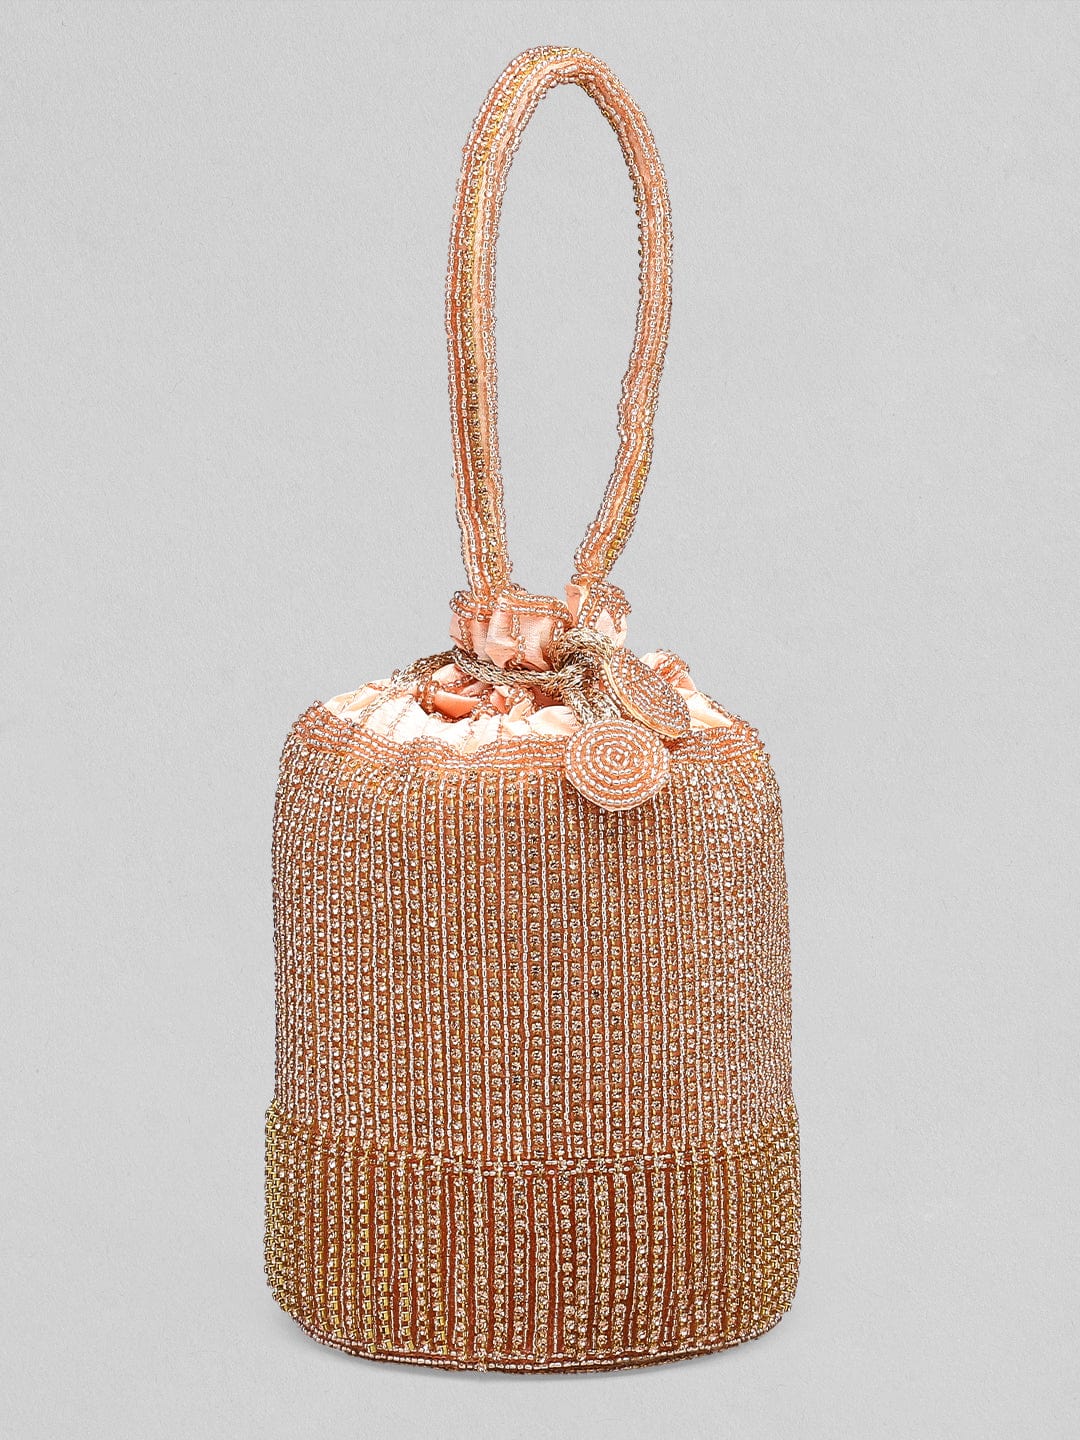 Rubans Peach Coloured Potli Bag With Golden Embroided Design.